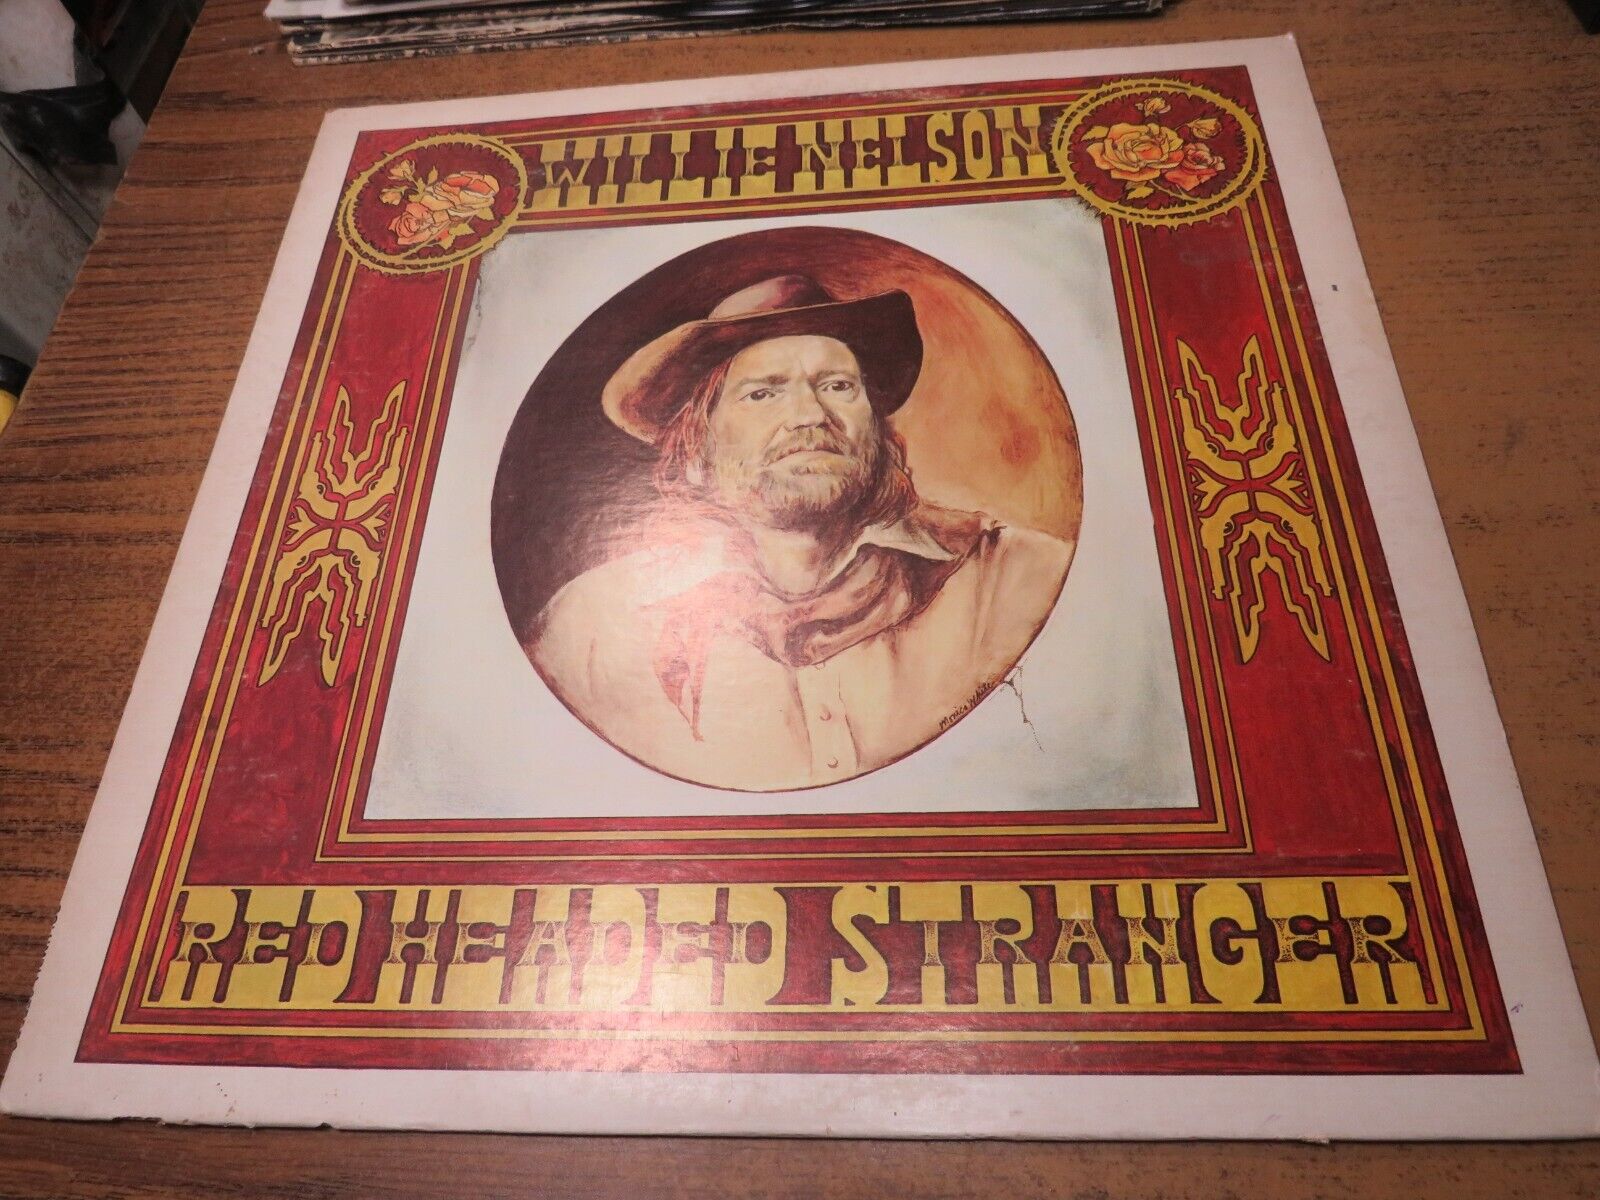 WILLIE NELSON ~ THE RED HEADED STRANGER LP (1975) ORIG KC 33482 COUNTRY